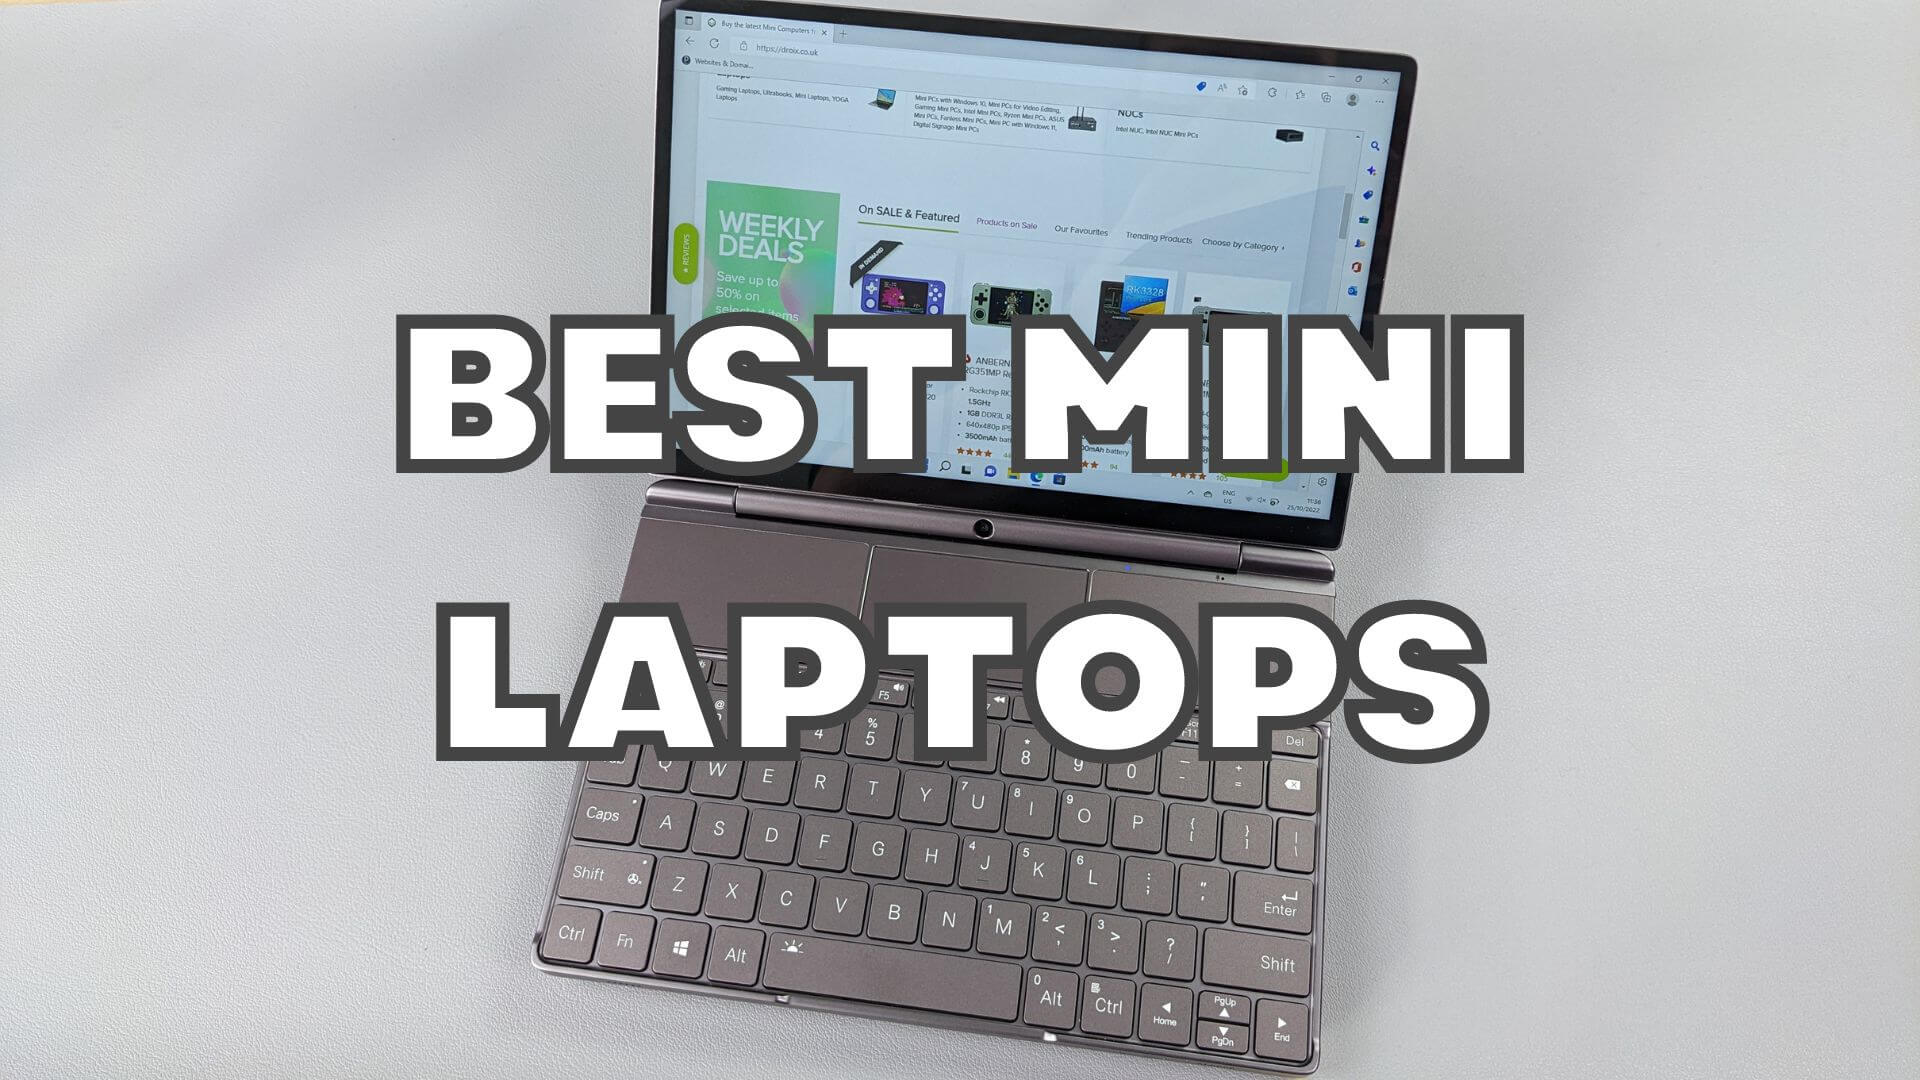 The Best Mini Laptops Droix Blogs Latest Technology And Gadgets